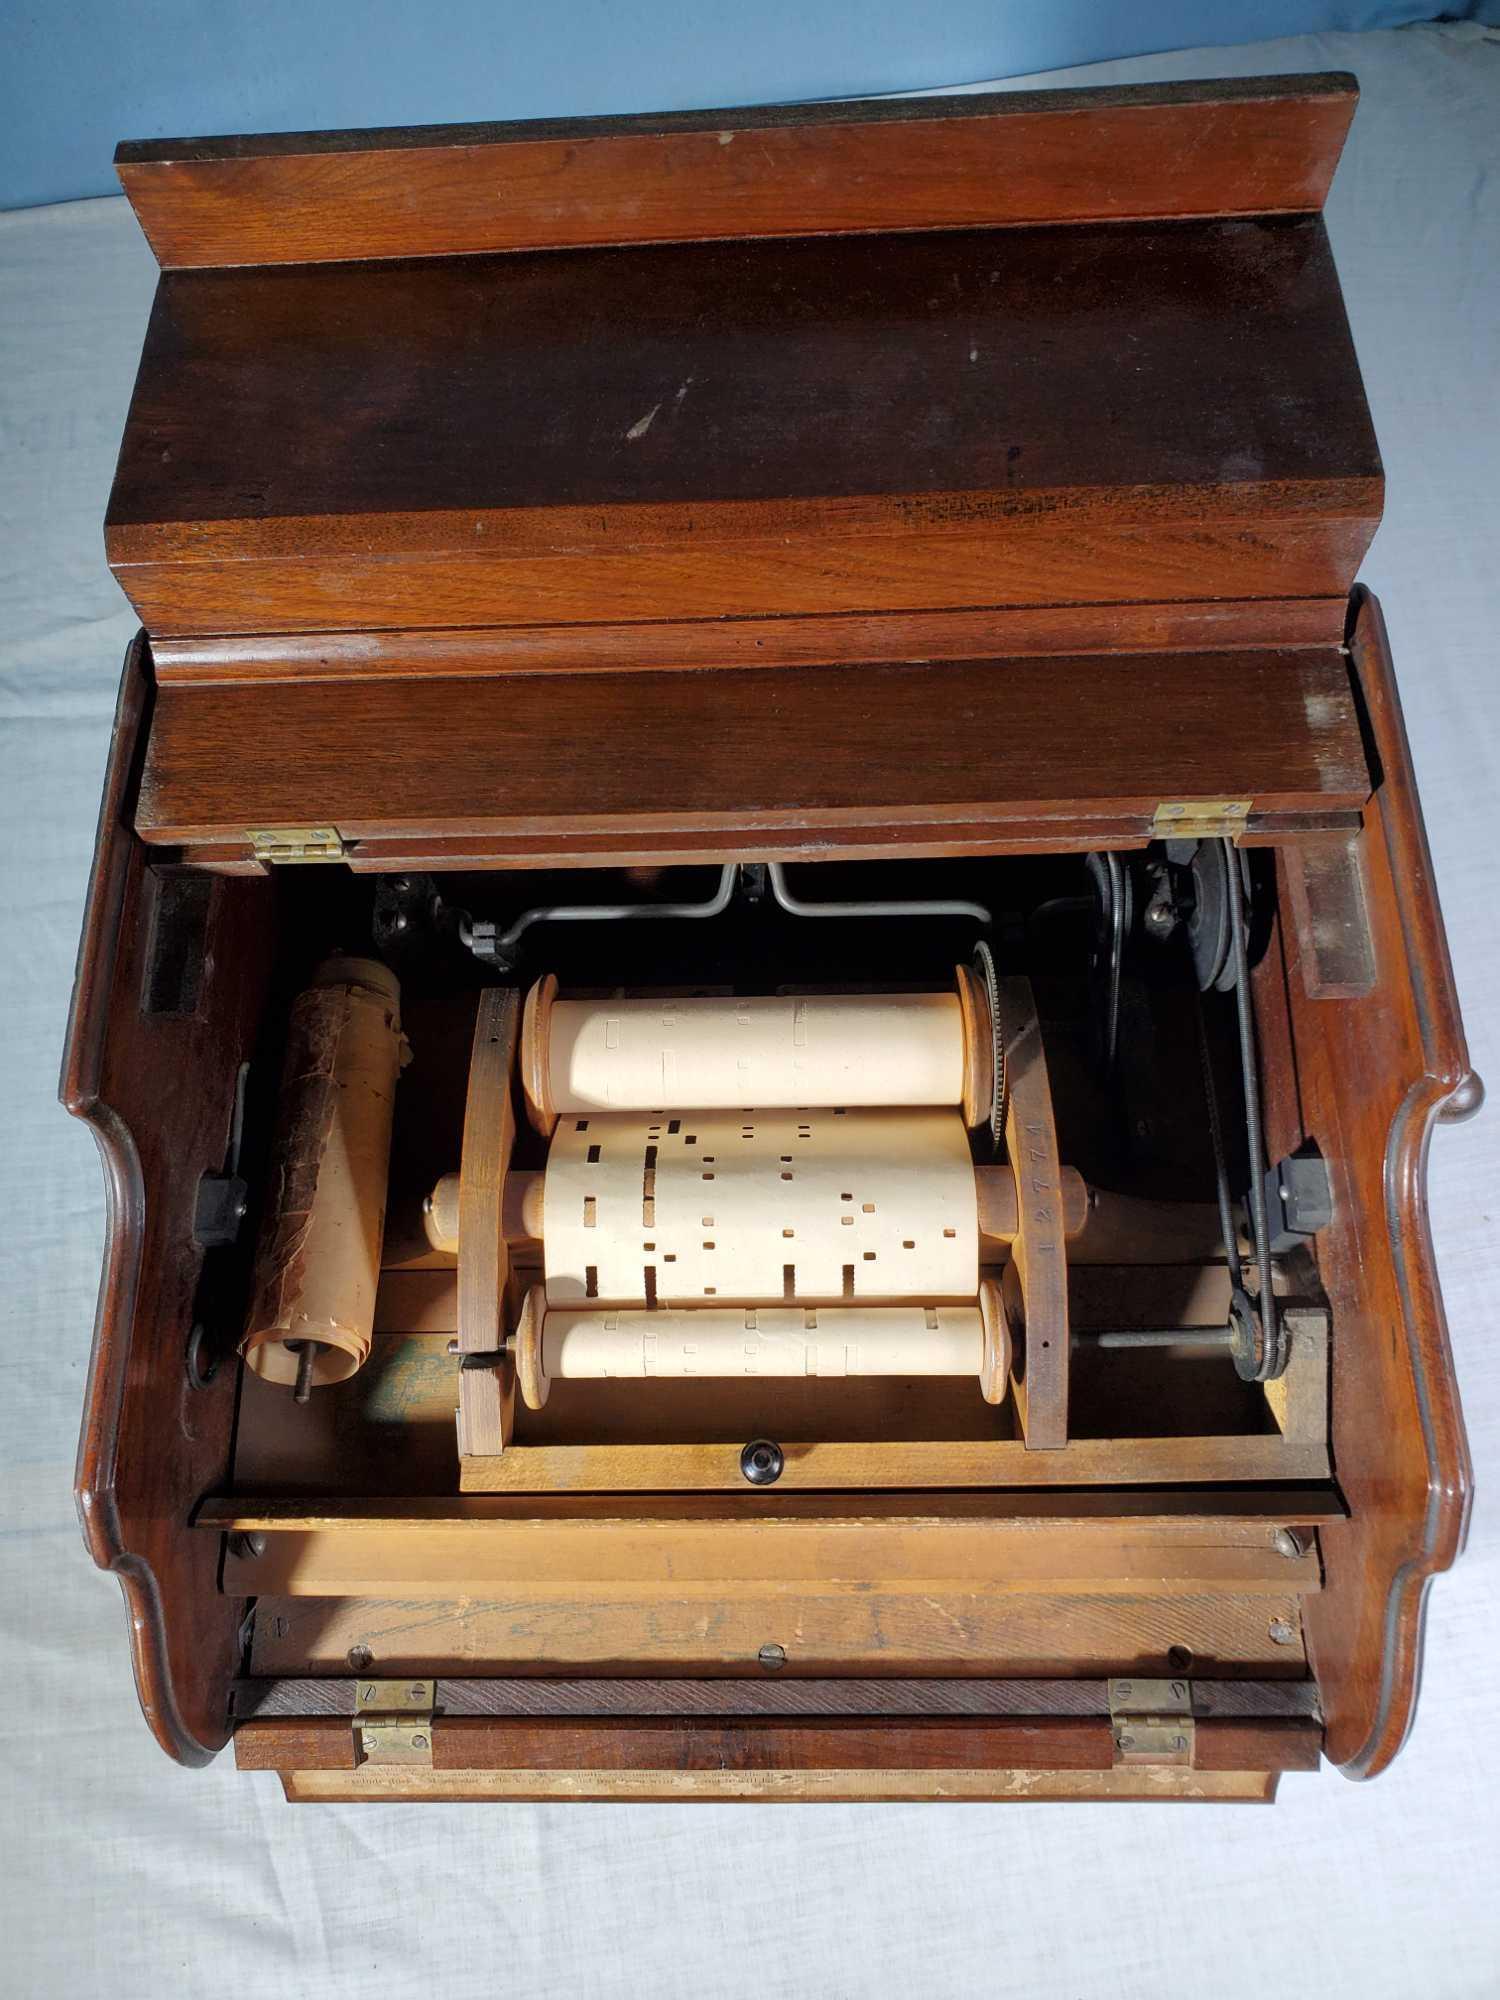 The Improved Celestina Paper Roll Organ